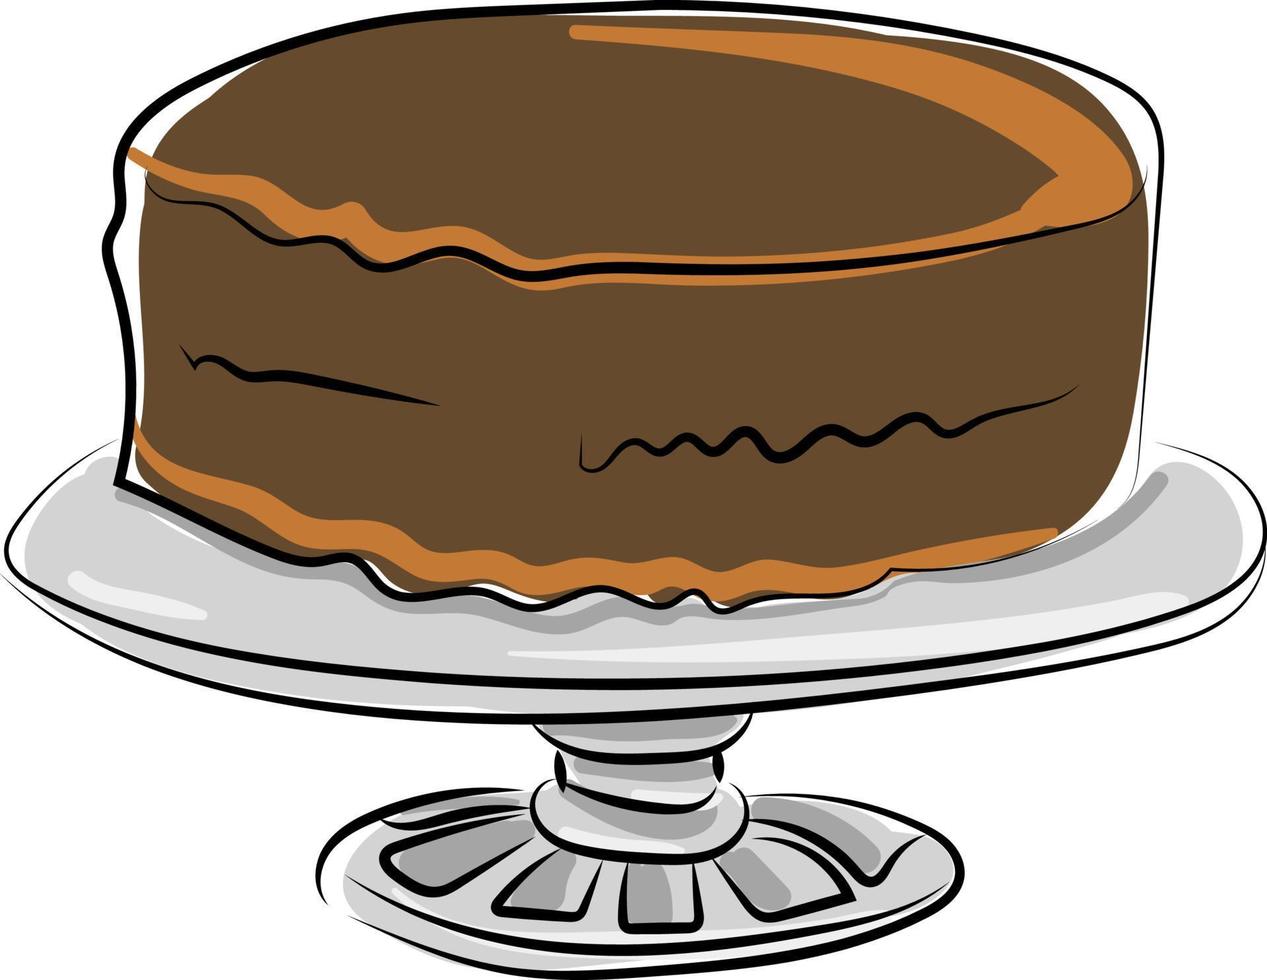 Chocolate cake, illustration, vector on white background.